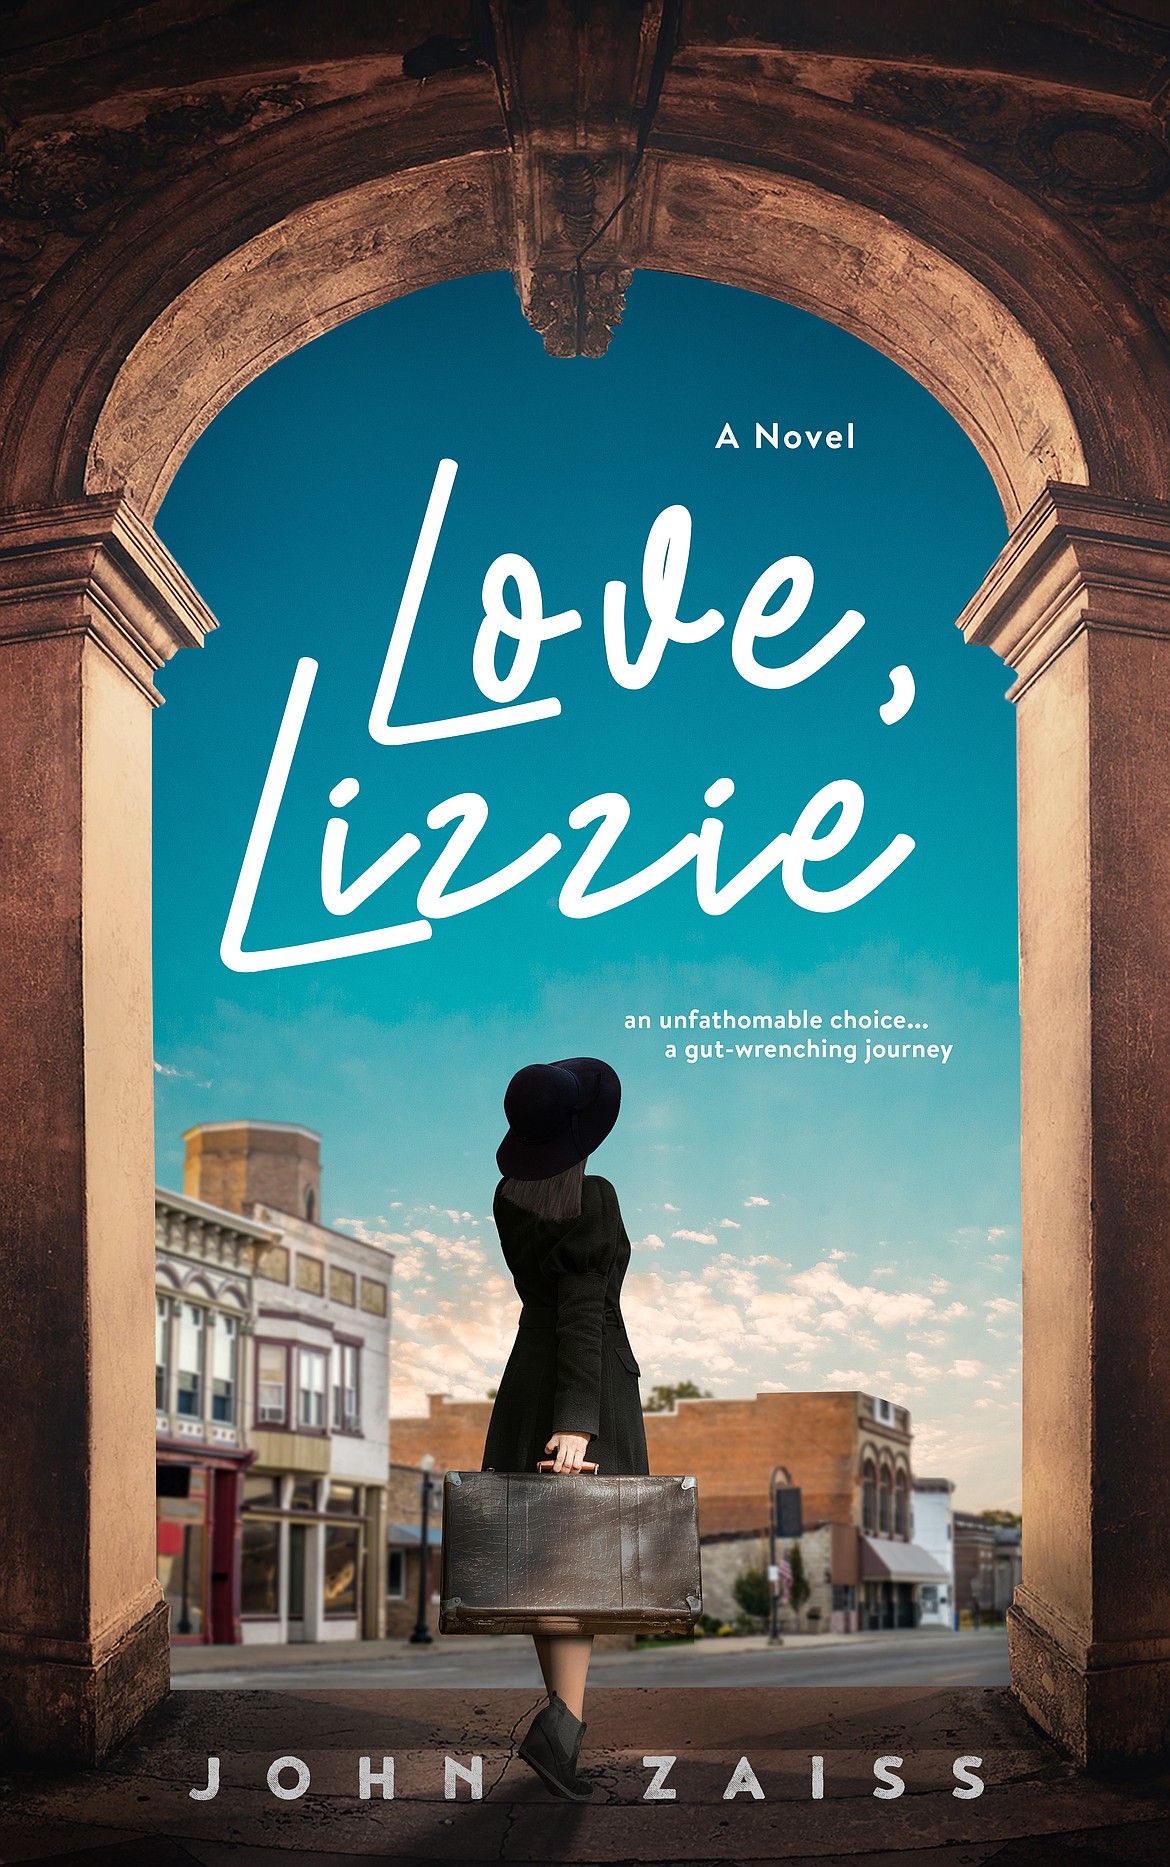 "Love, Lizzy" by John Zaiss